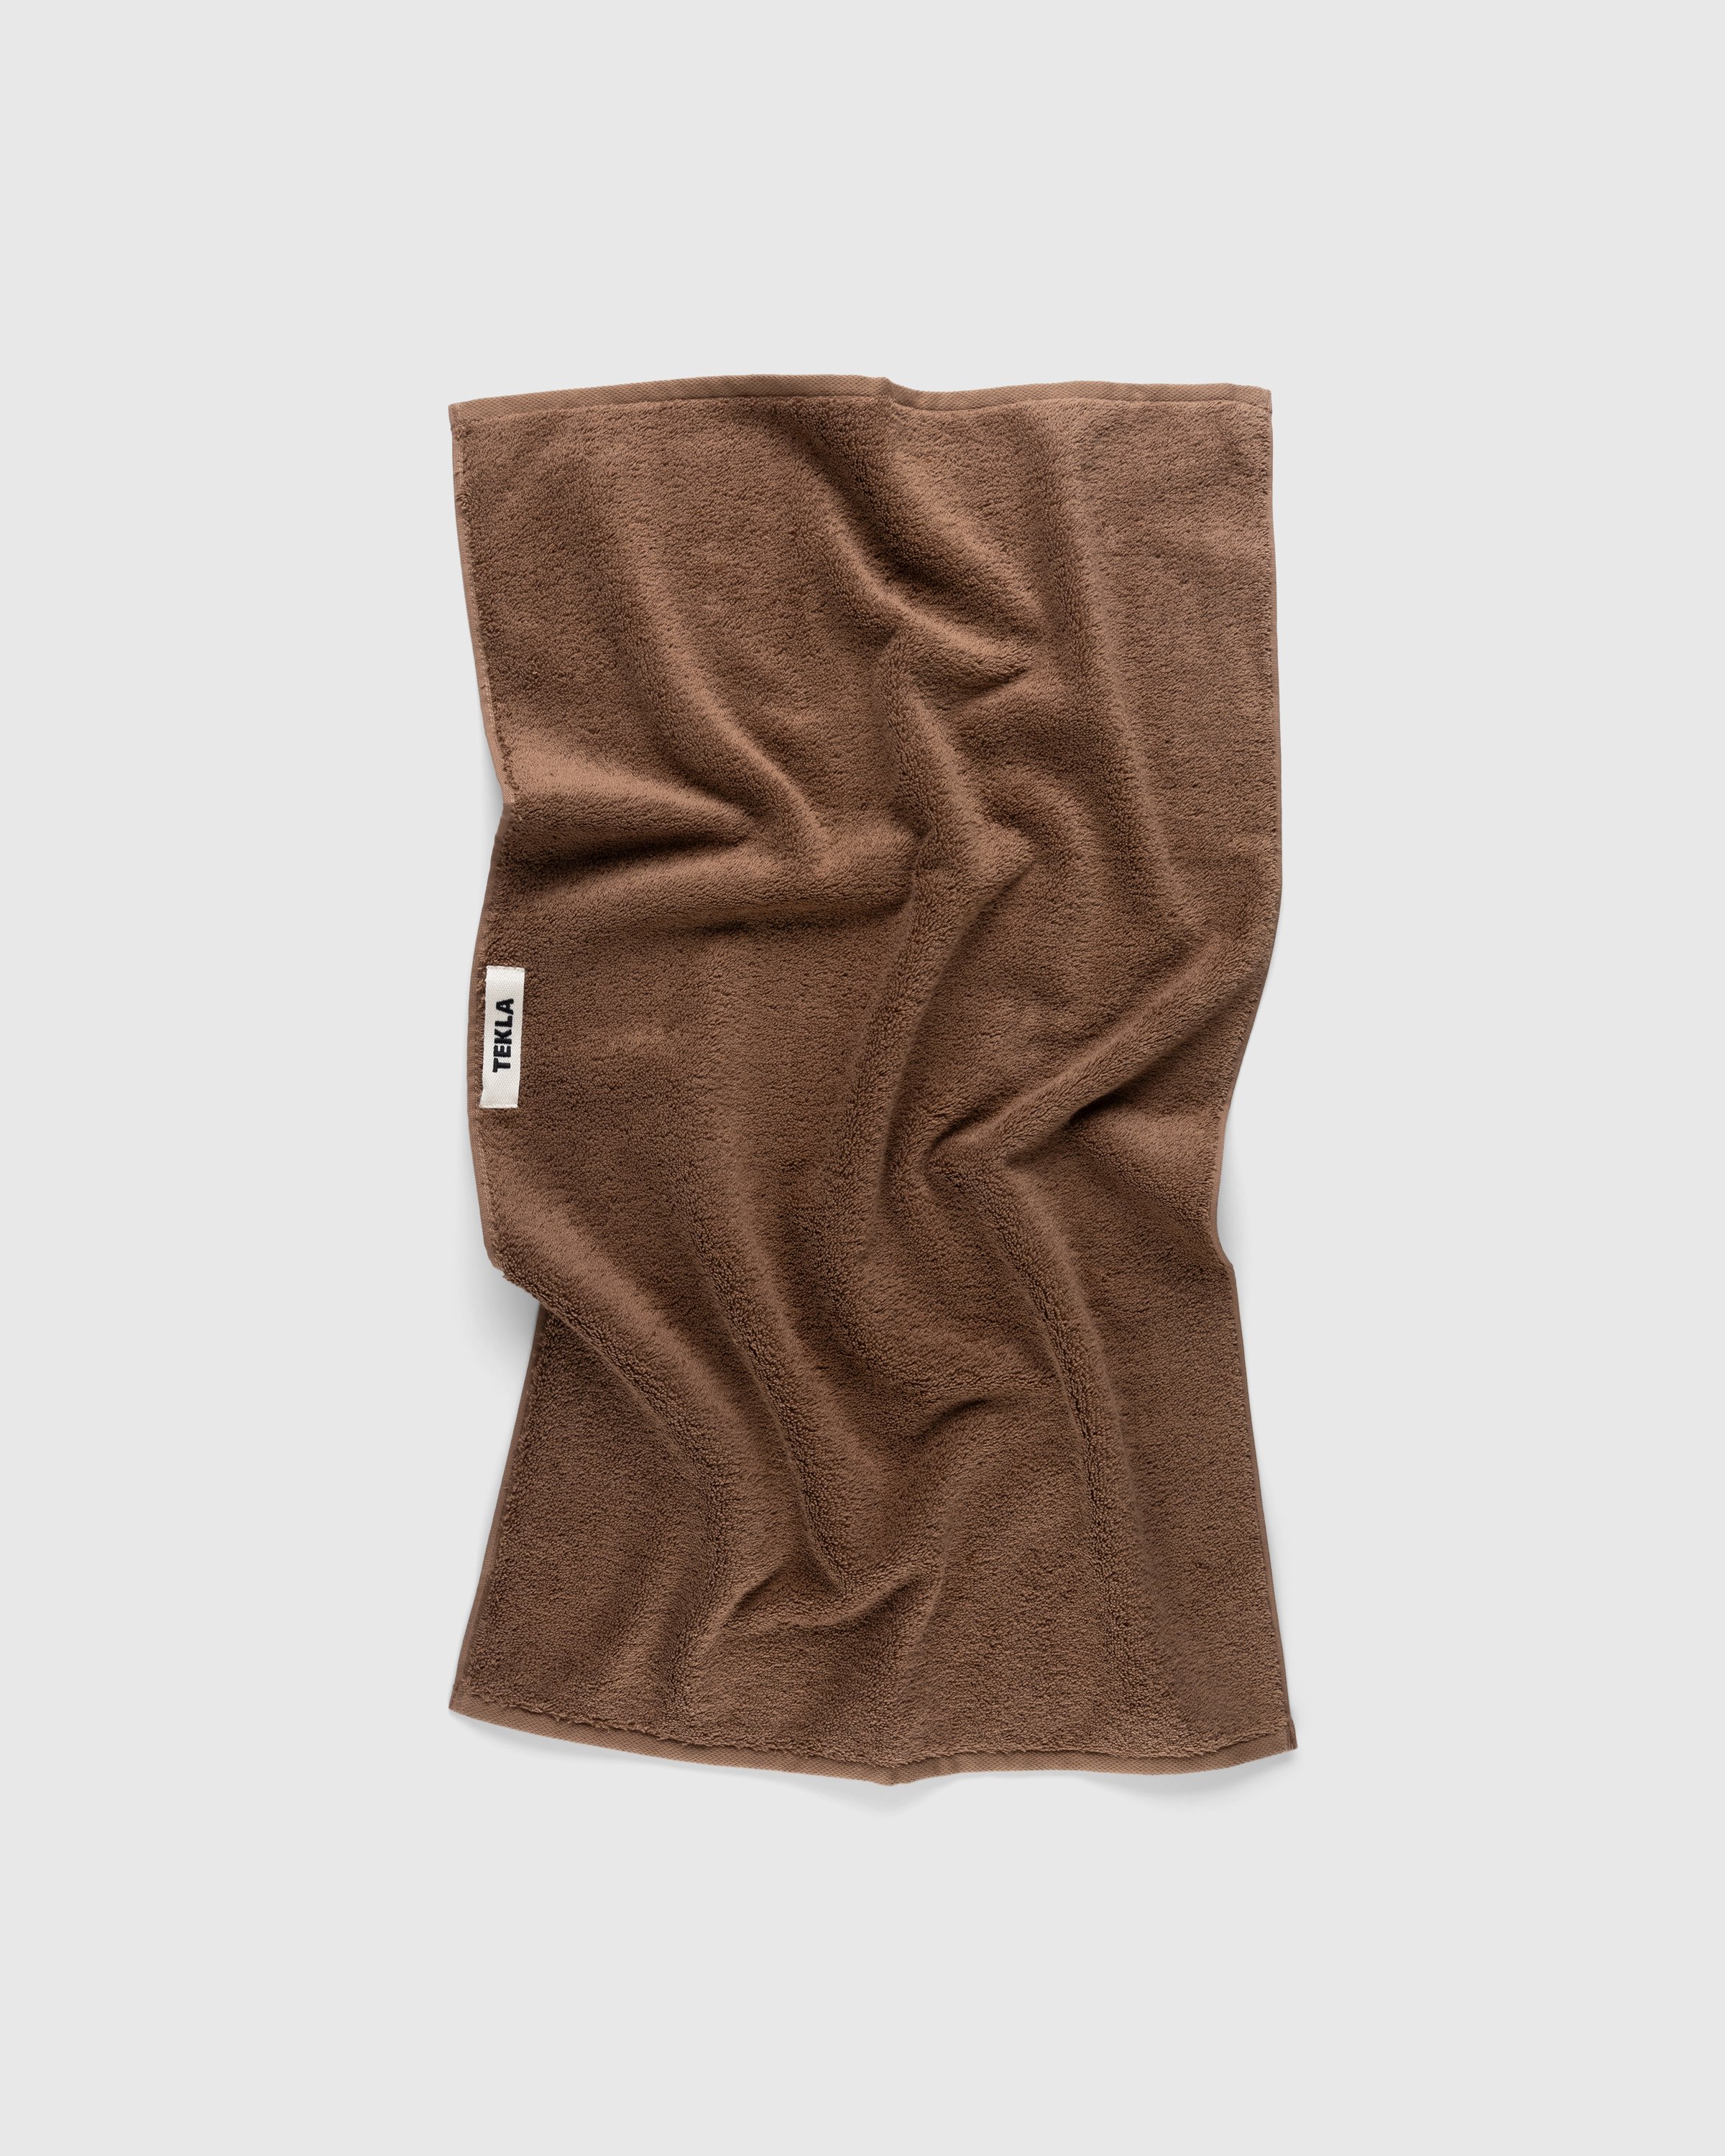 Tekla - Hand Towel Kodiak Brown - Lifestyle - Brown - Image 1